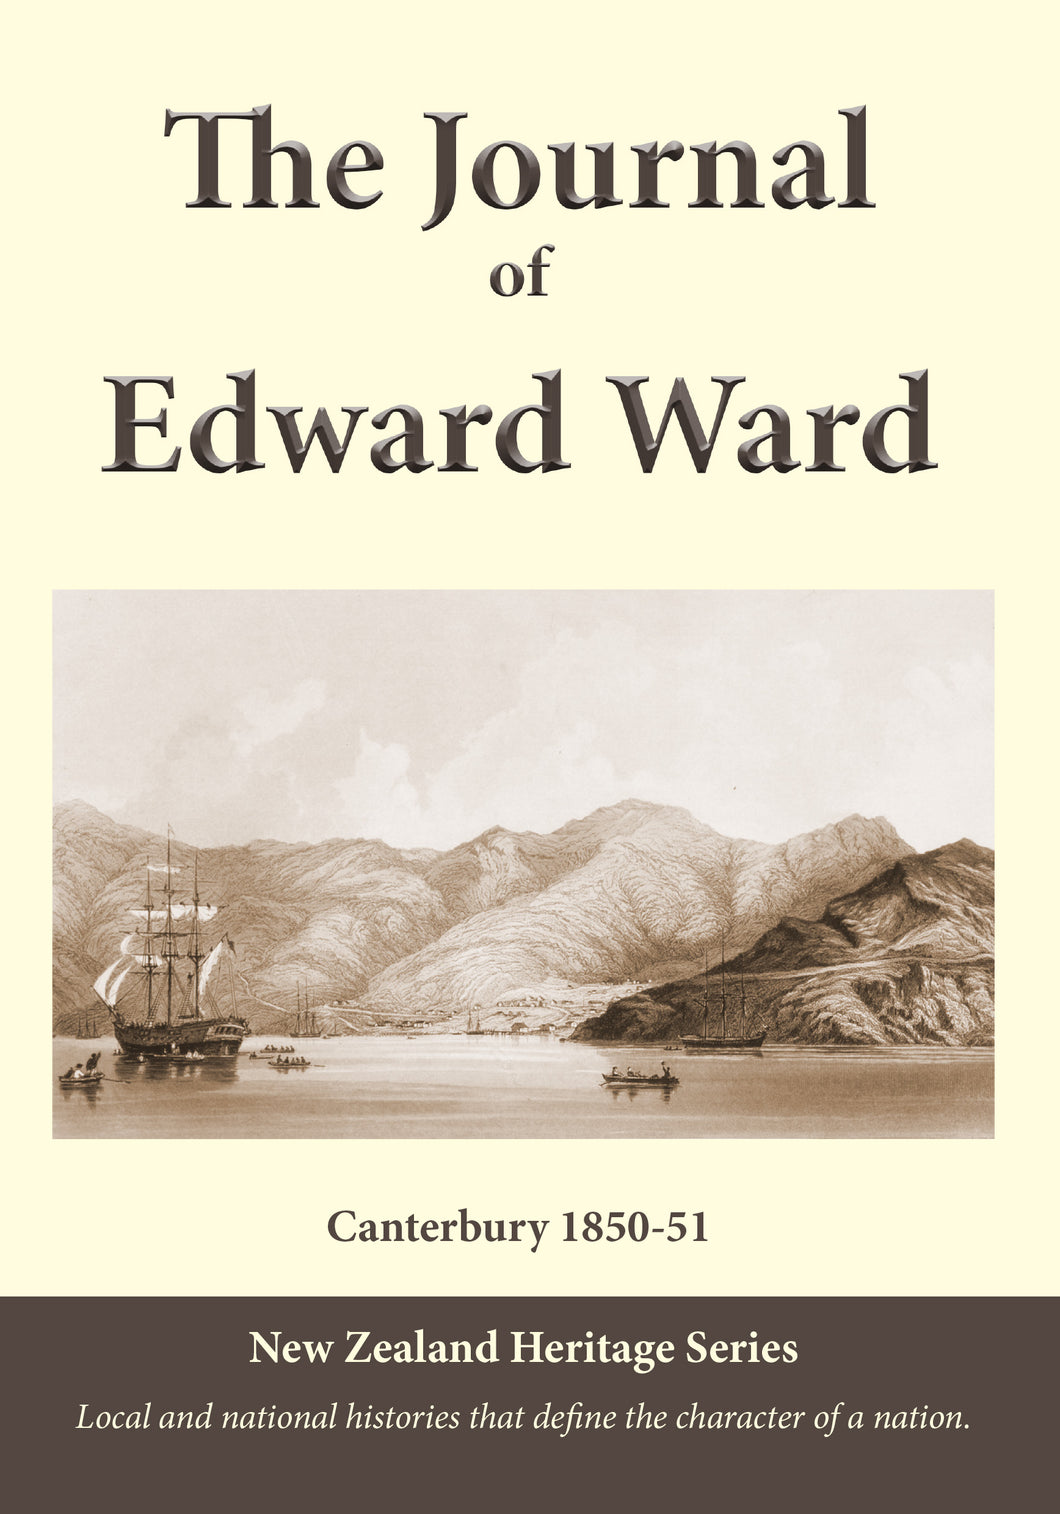 The Journal of Edward Ward